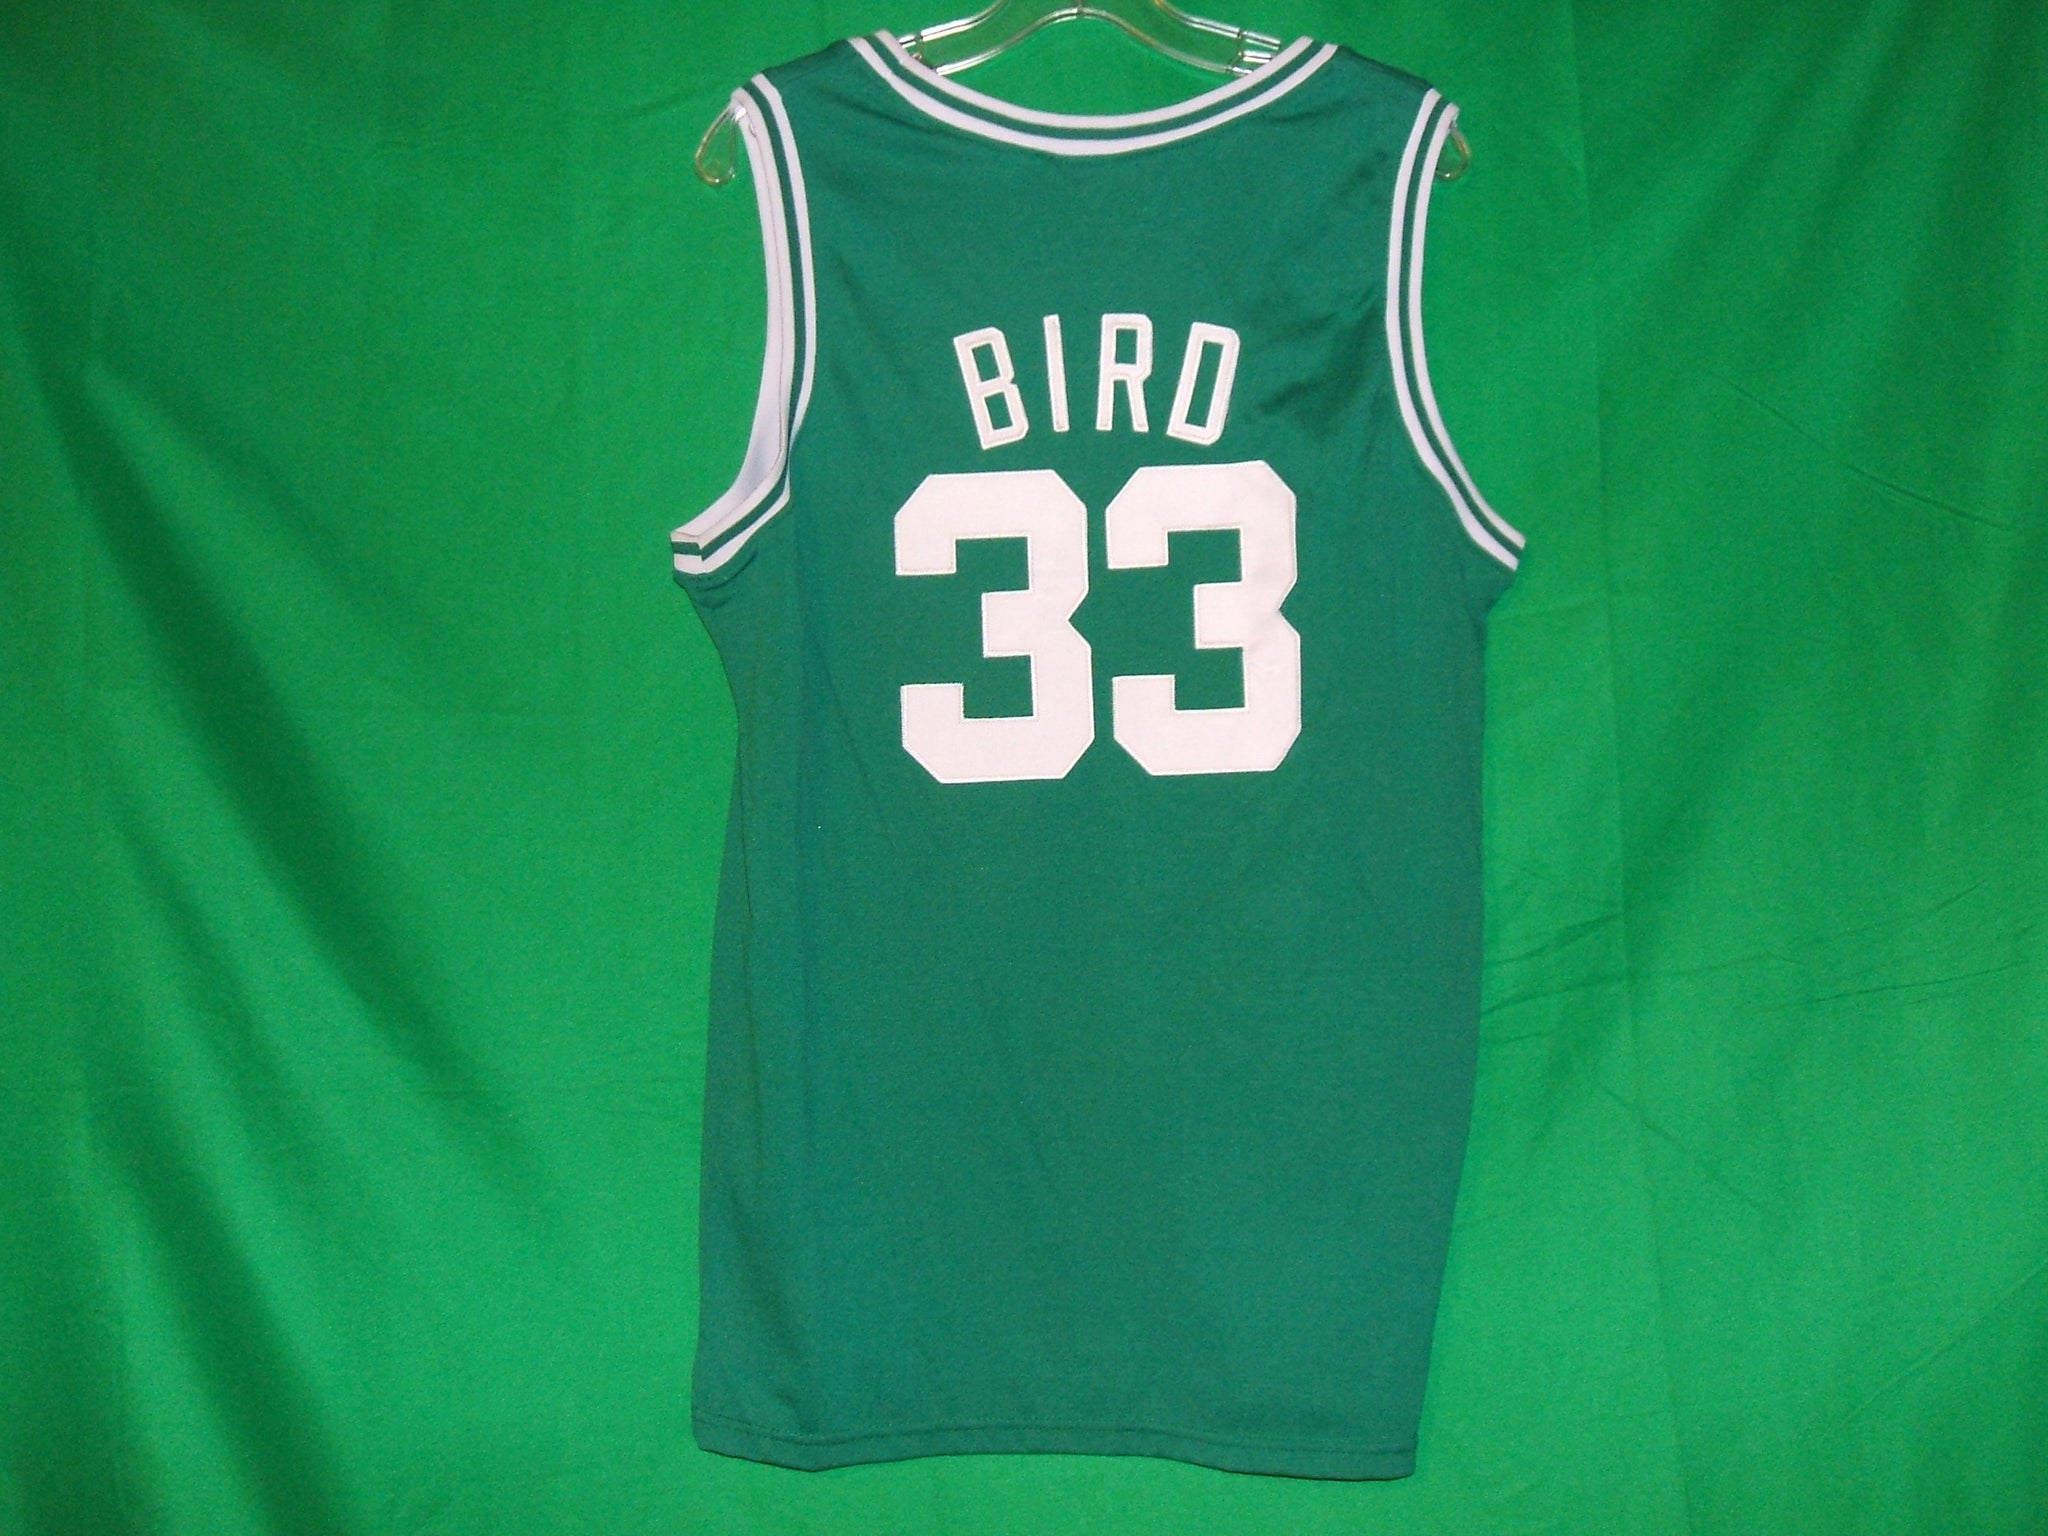 Adidas Boston Celtics Hardwood Classics Larry Bird #33 Jersey